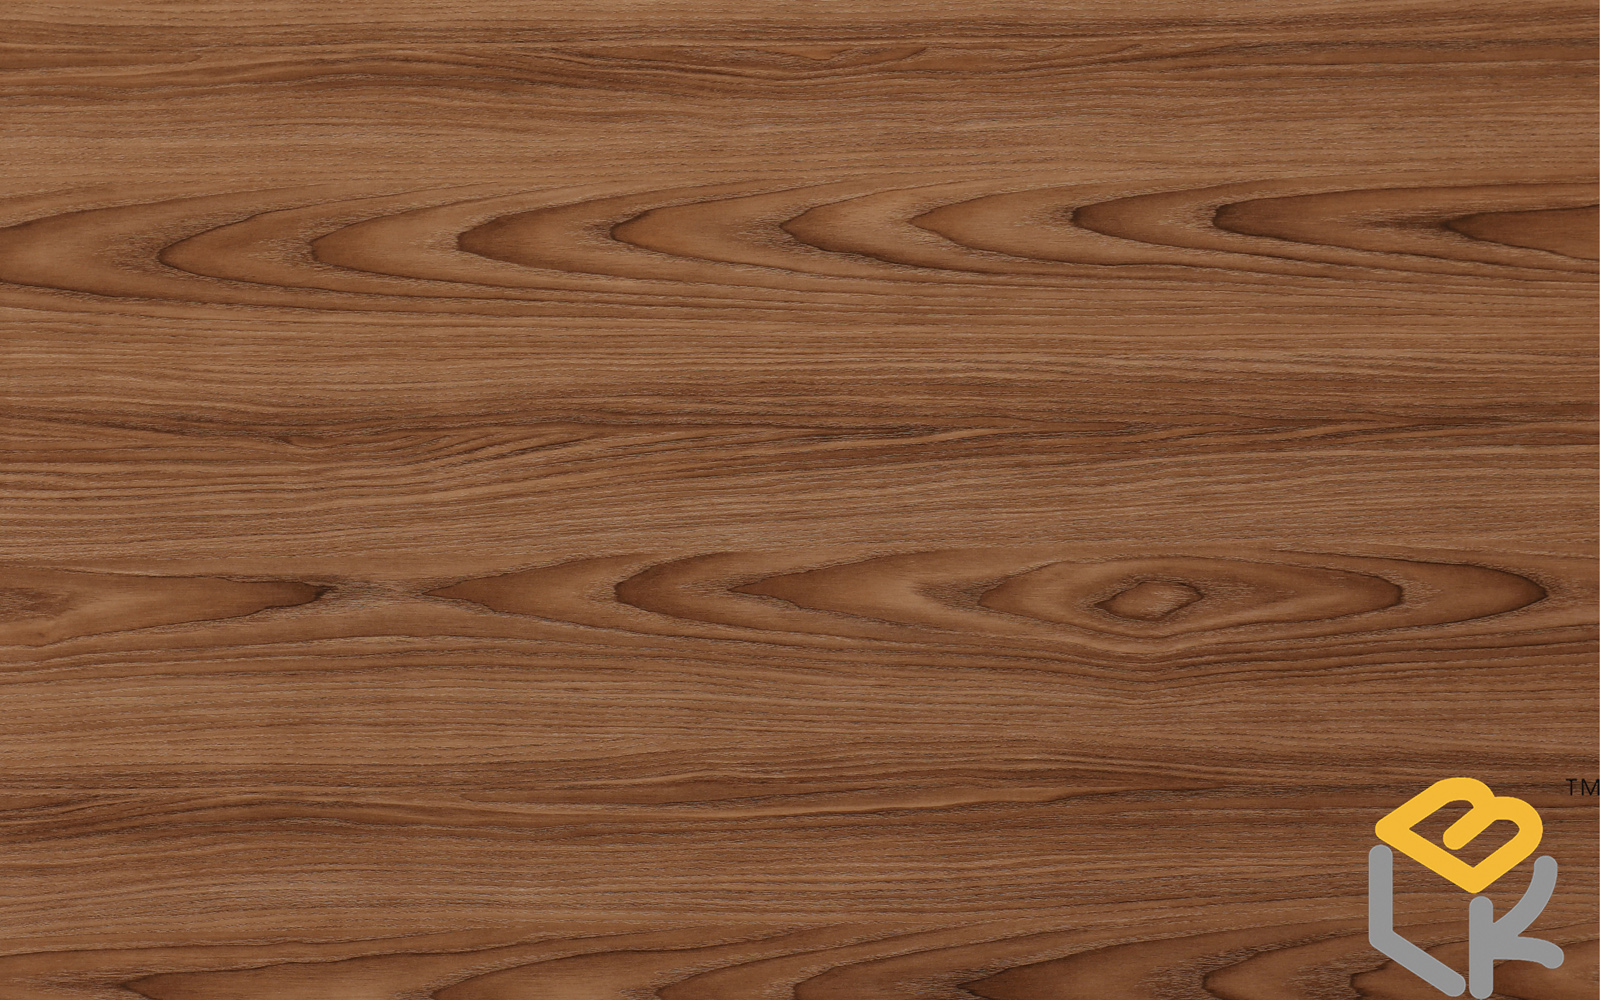 BLK decor woodgrain melamine faced plywood